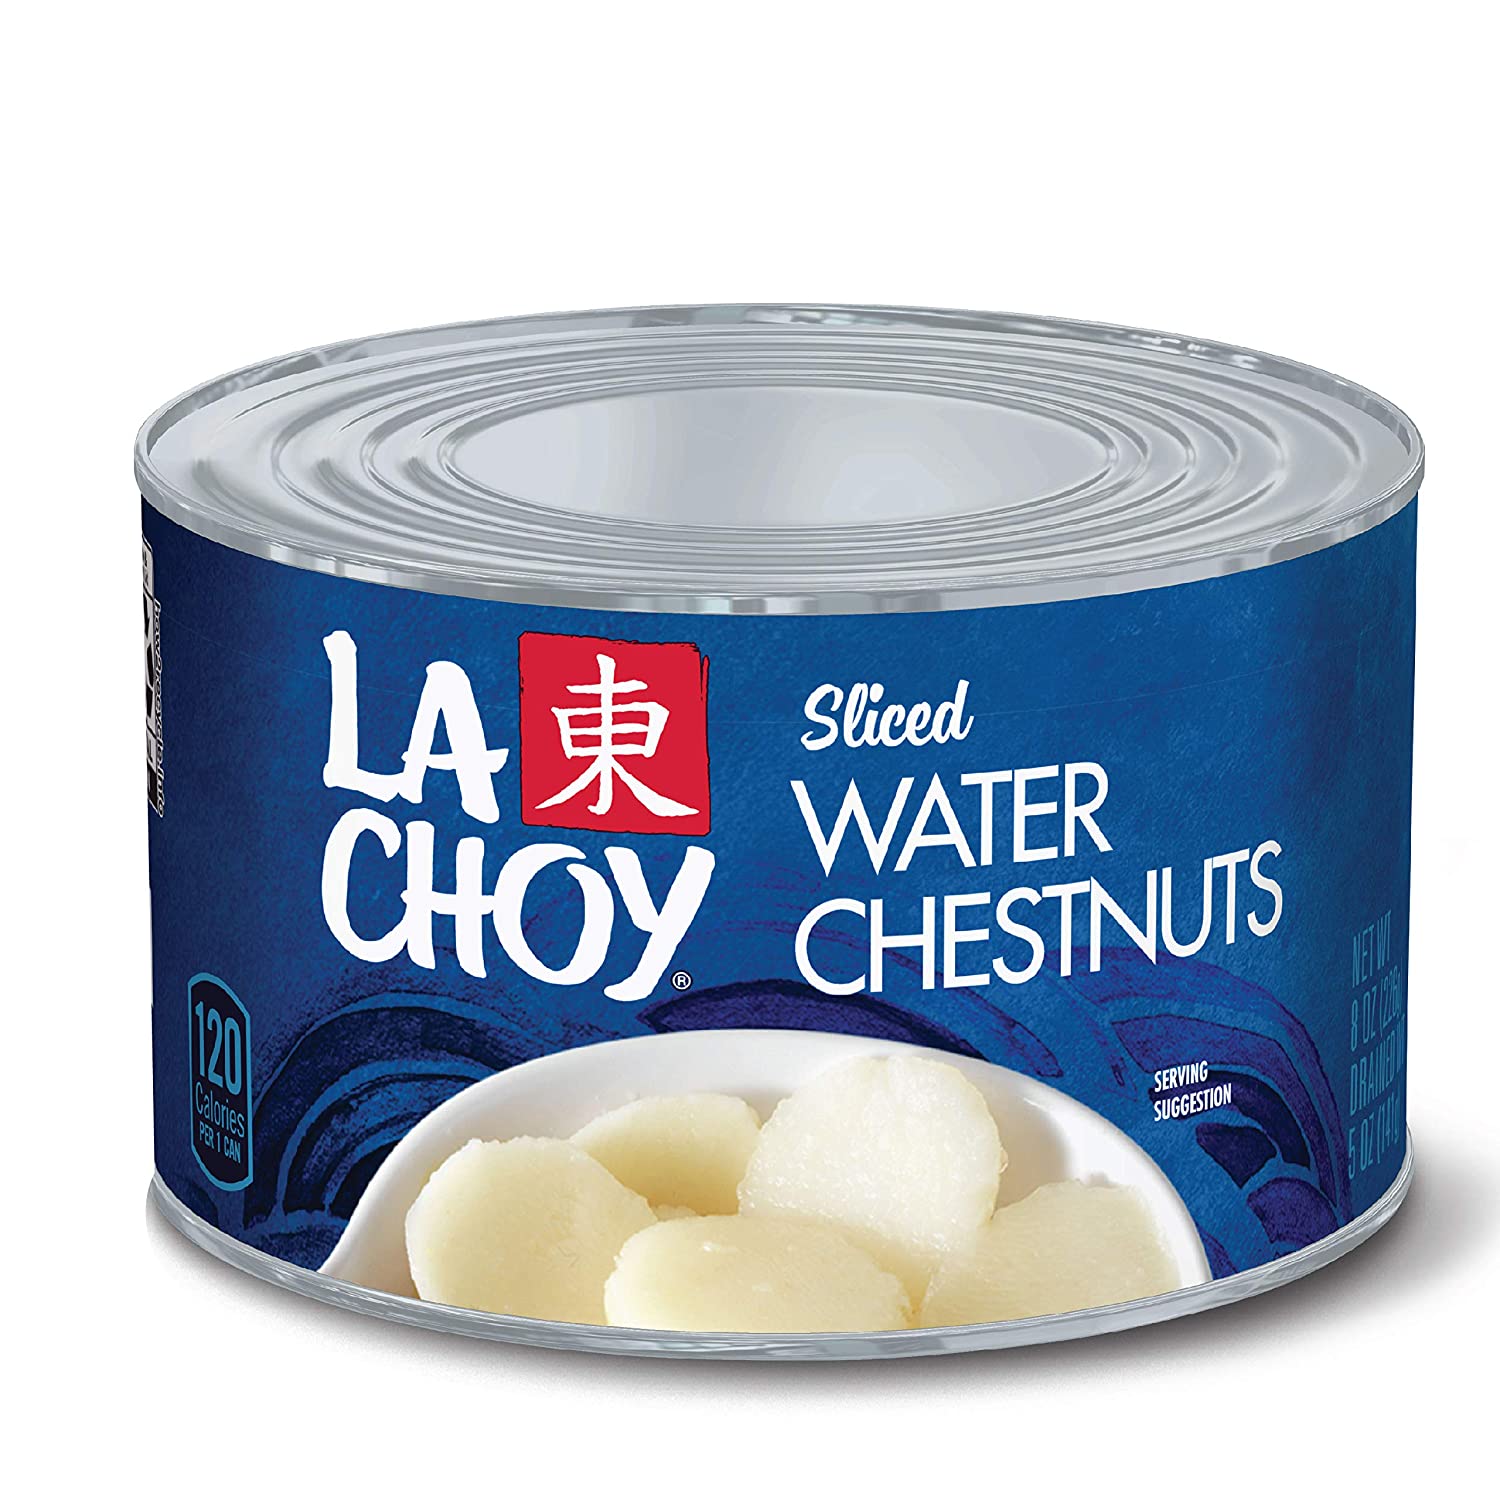 La Choy Water Chestnuts